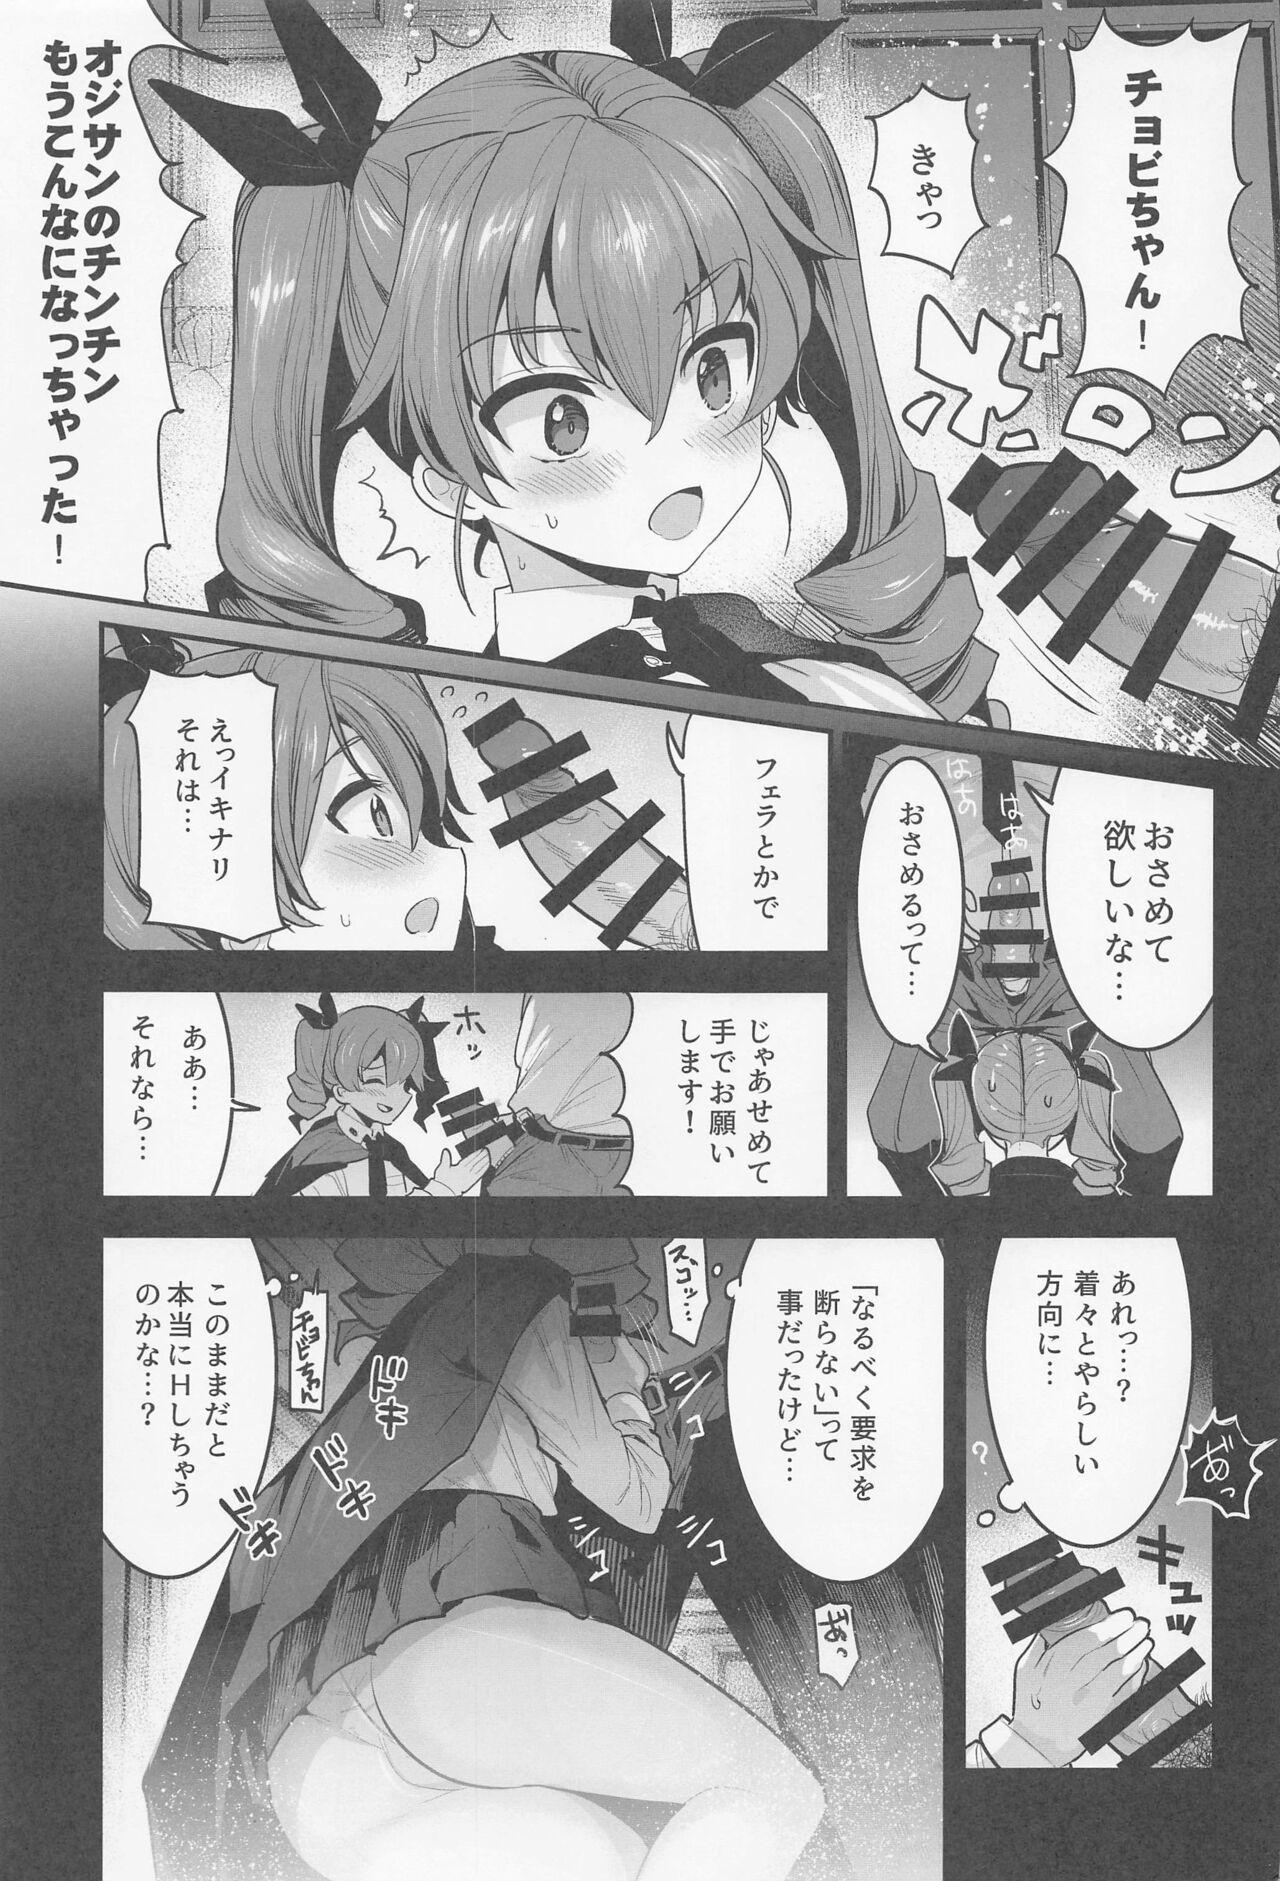 Letsdoeit anchobi dogezadeonegaishitaraippatsuyarasetekuremashita - Girls und panzer Nerd - Page 6